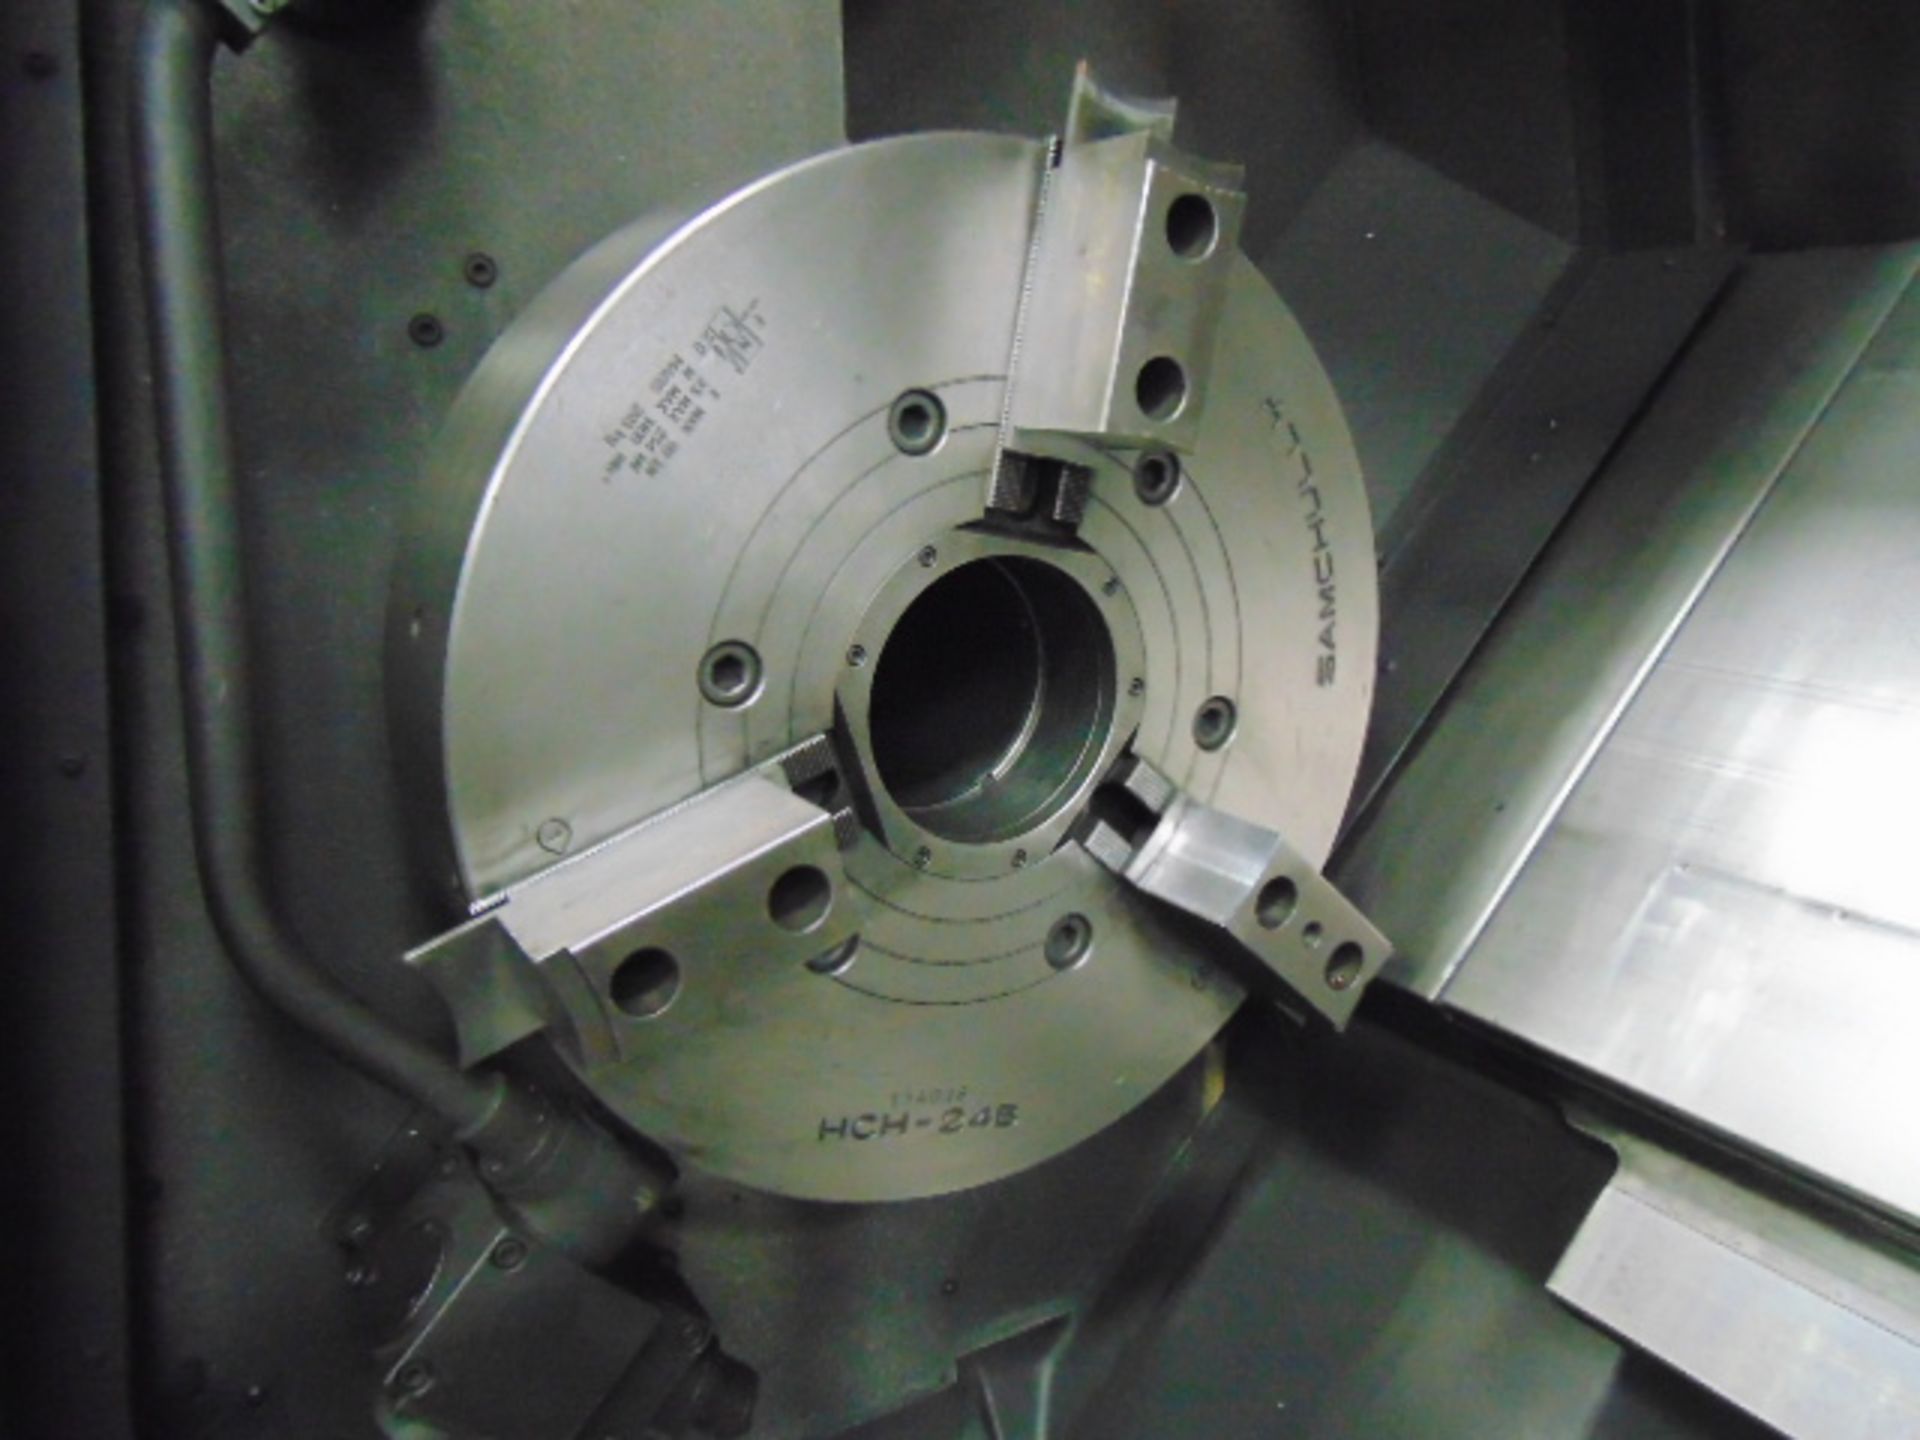 CNC LATHE, DOOSAN PUMA MDL. 480XL, new 1/2012, Fanuc 0i – Mdl. D CNC control, 35'4" swing over - Image 4 of 14